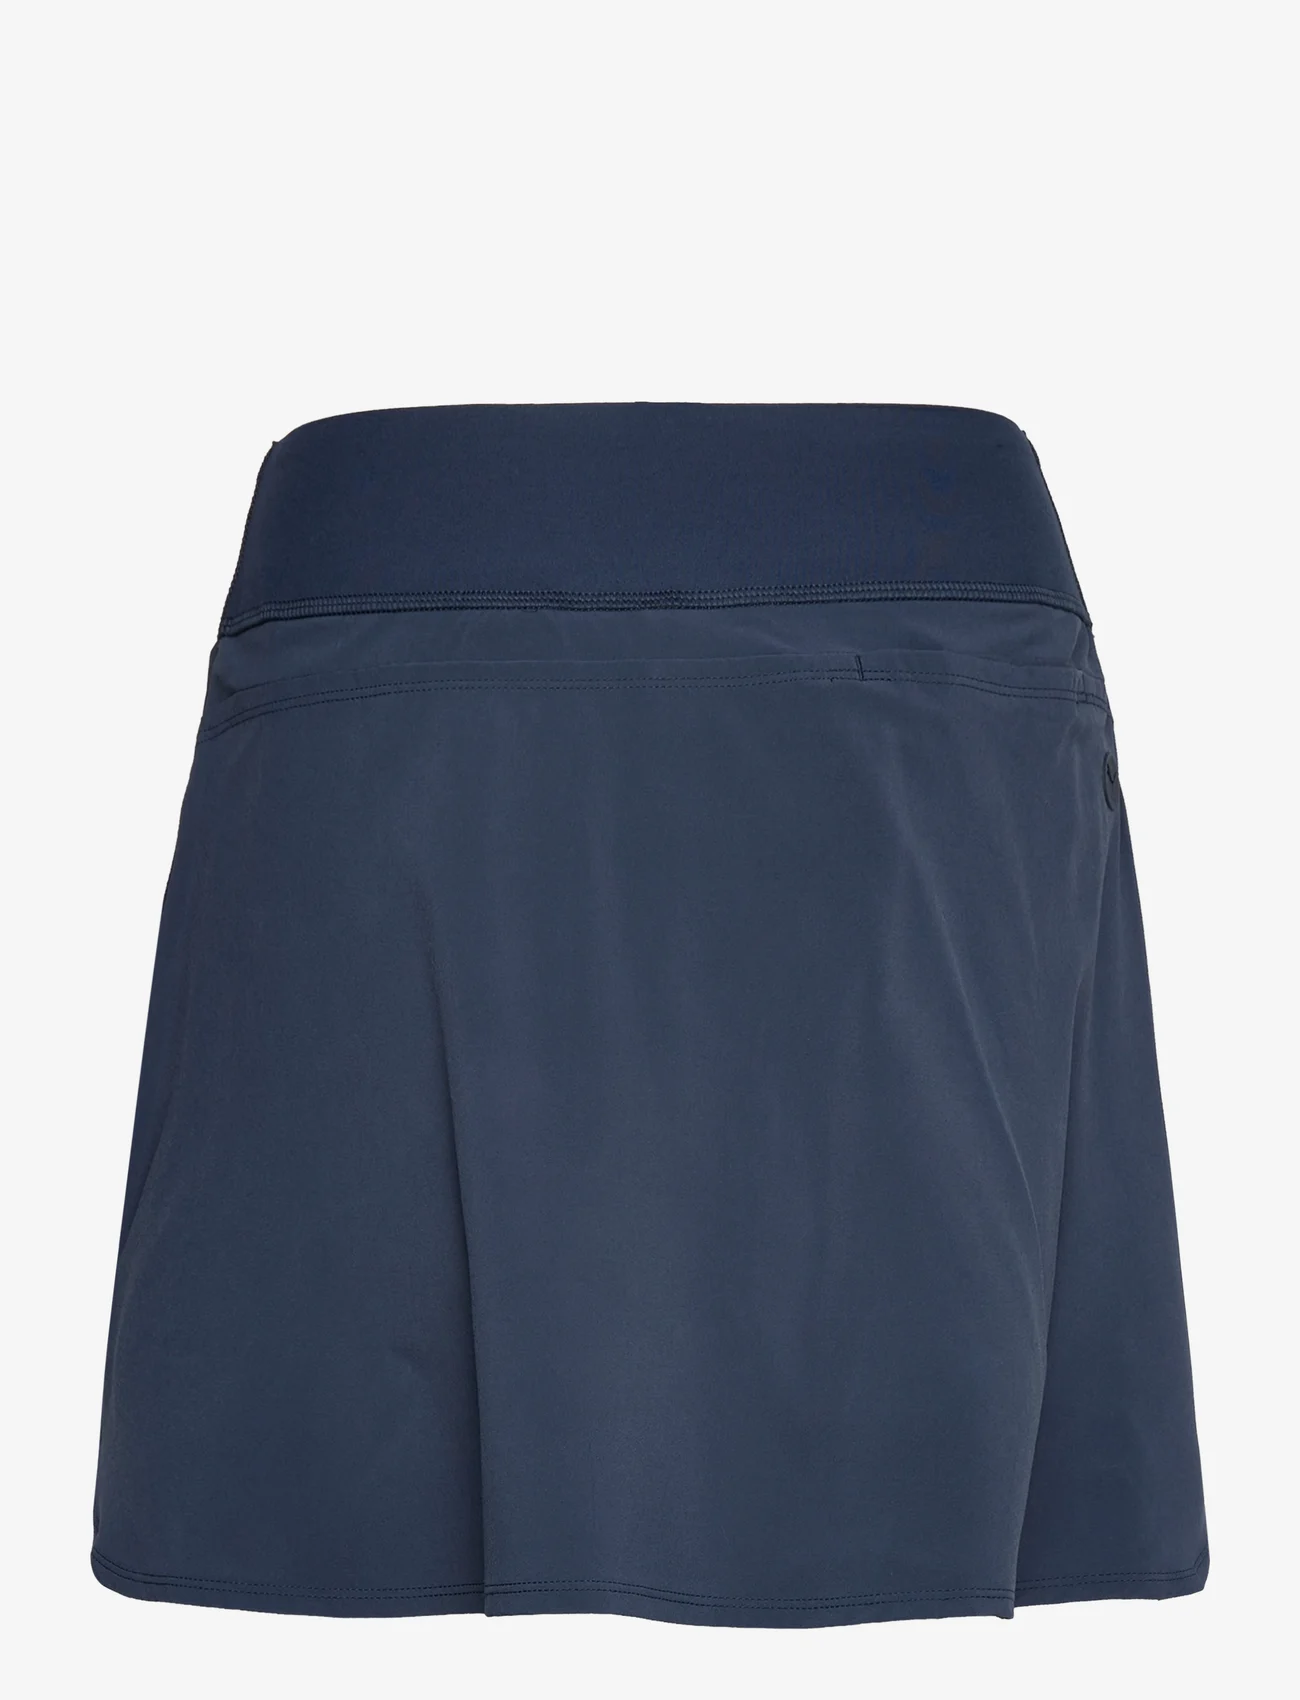 PUMA Golf - PWRSHAPE Solid Skirt - nederdele - navy blazer - 1